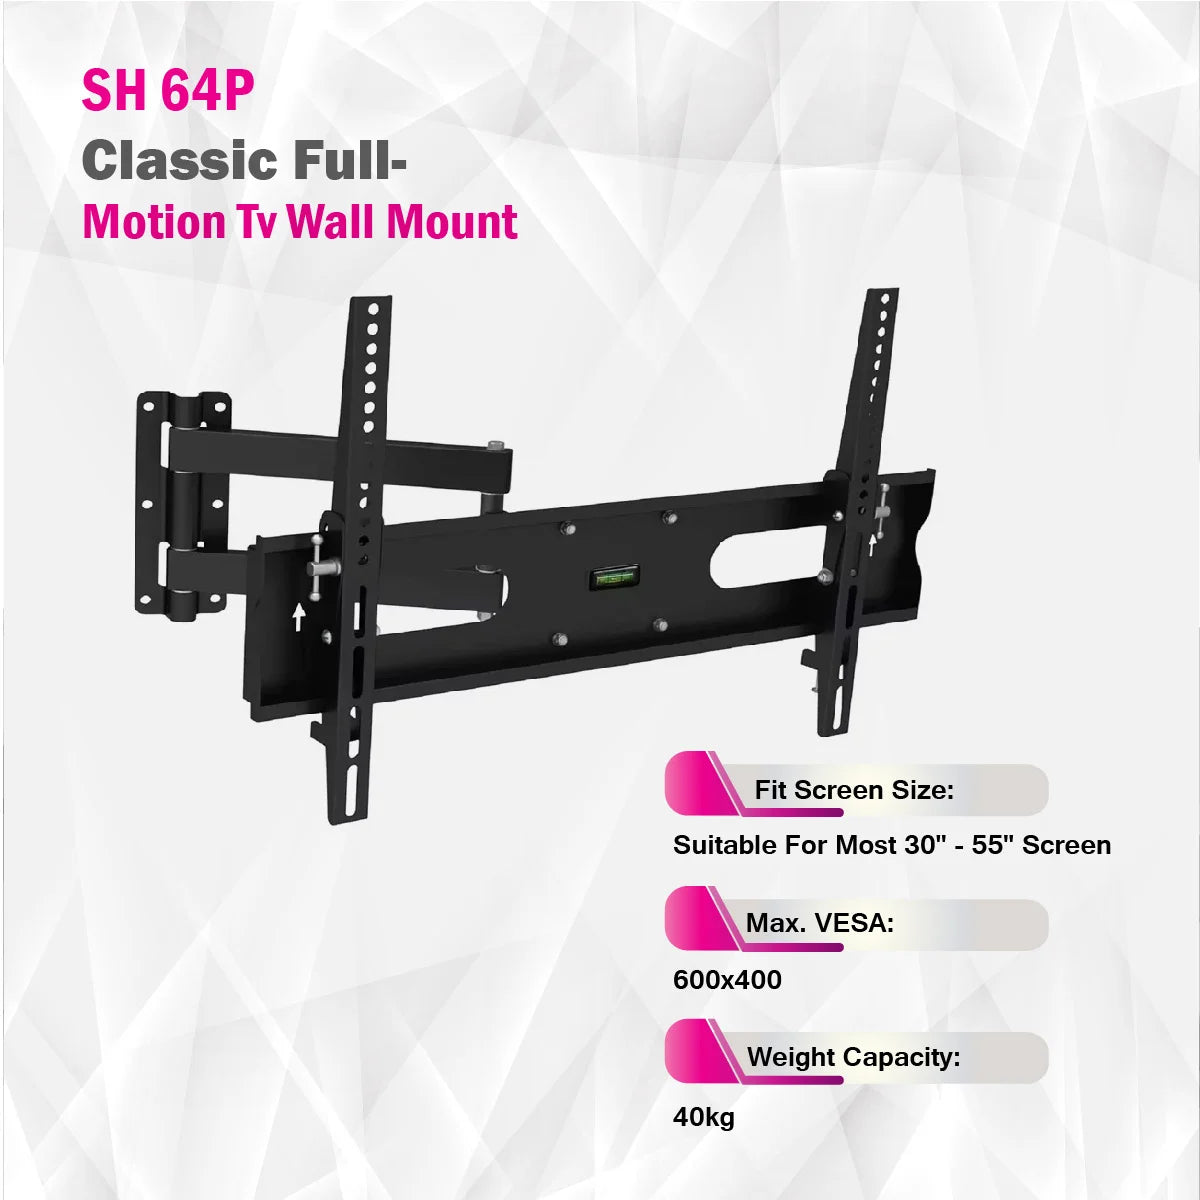 Skill Tech SH 64P - Classic Full-Motion Tv Wall Mount